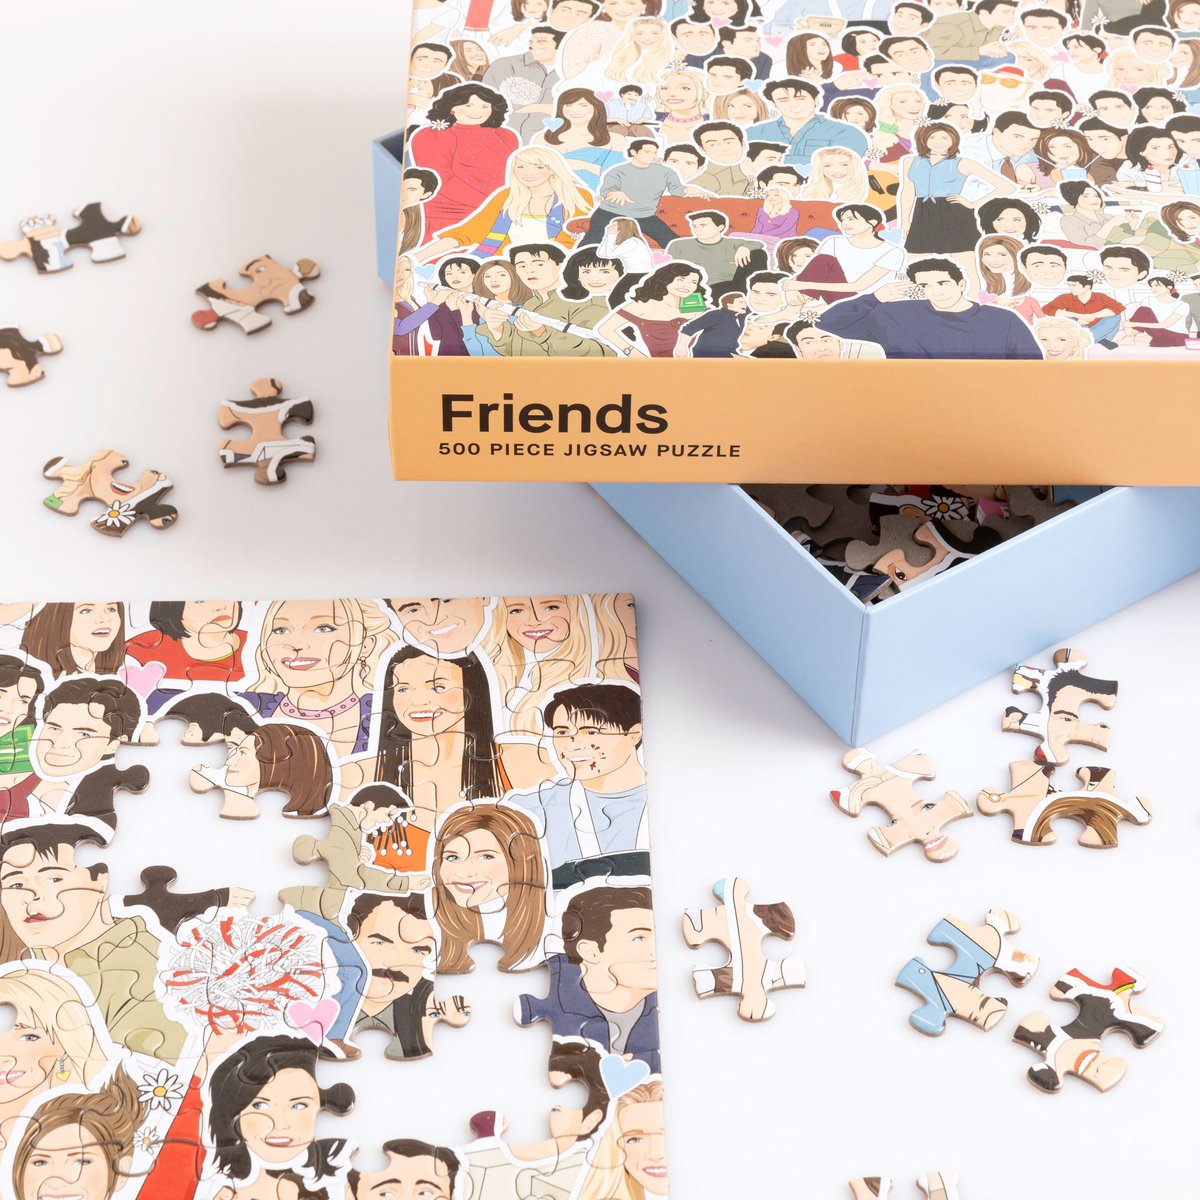 Friends: 500 Piece Jigsaw Puzzle | Papercut